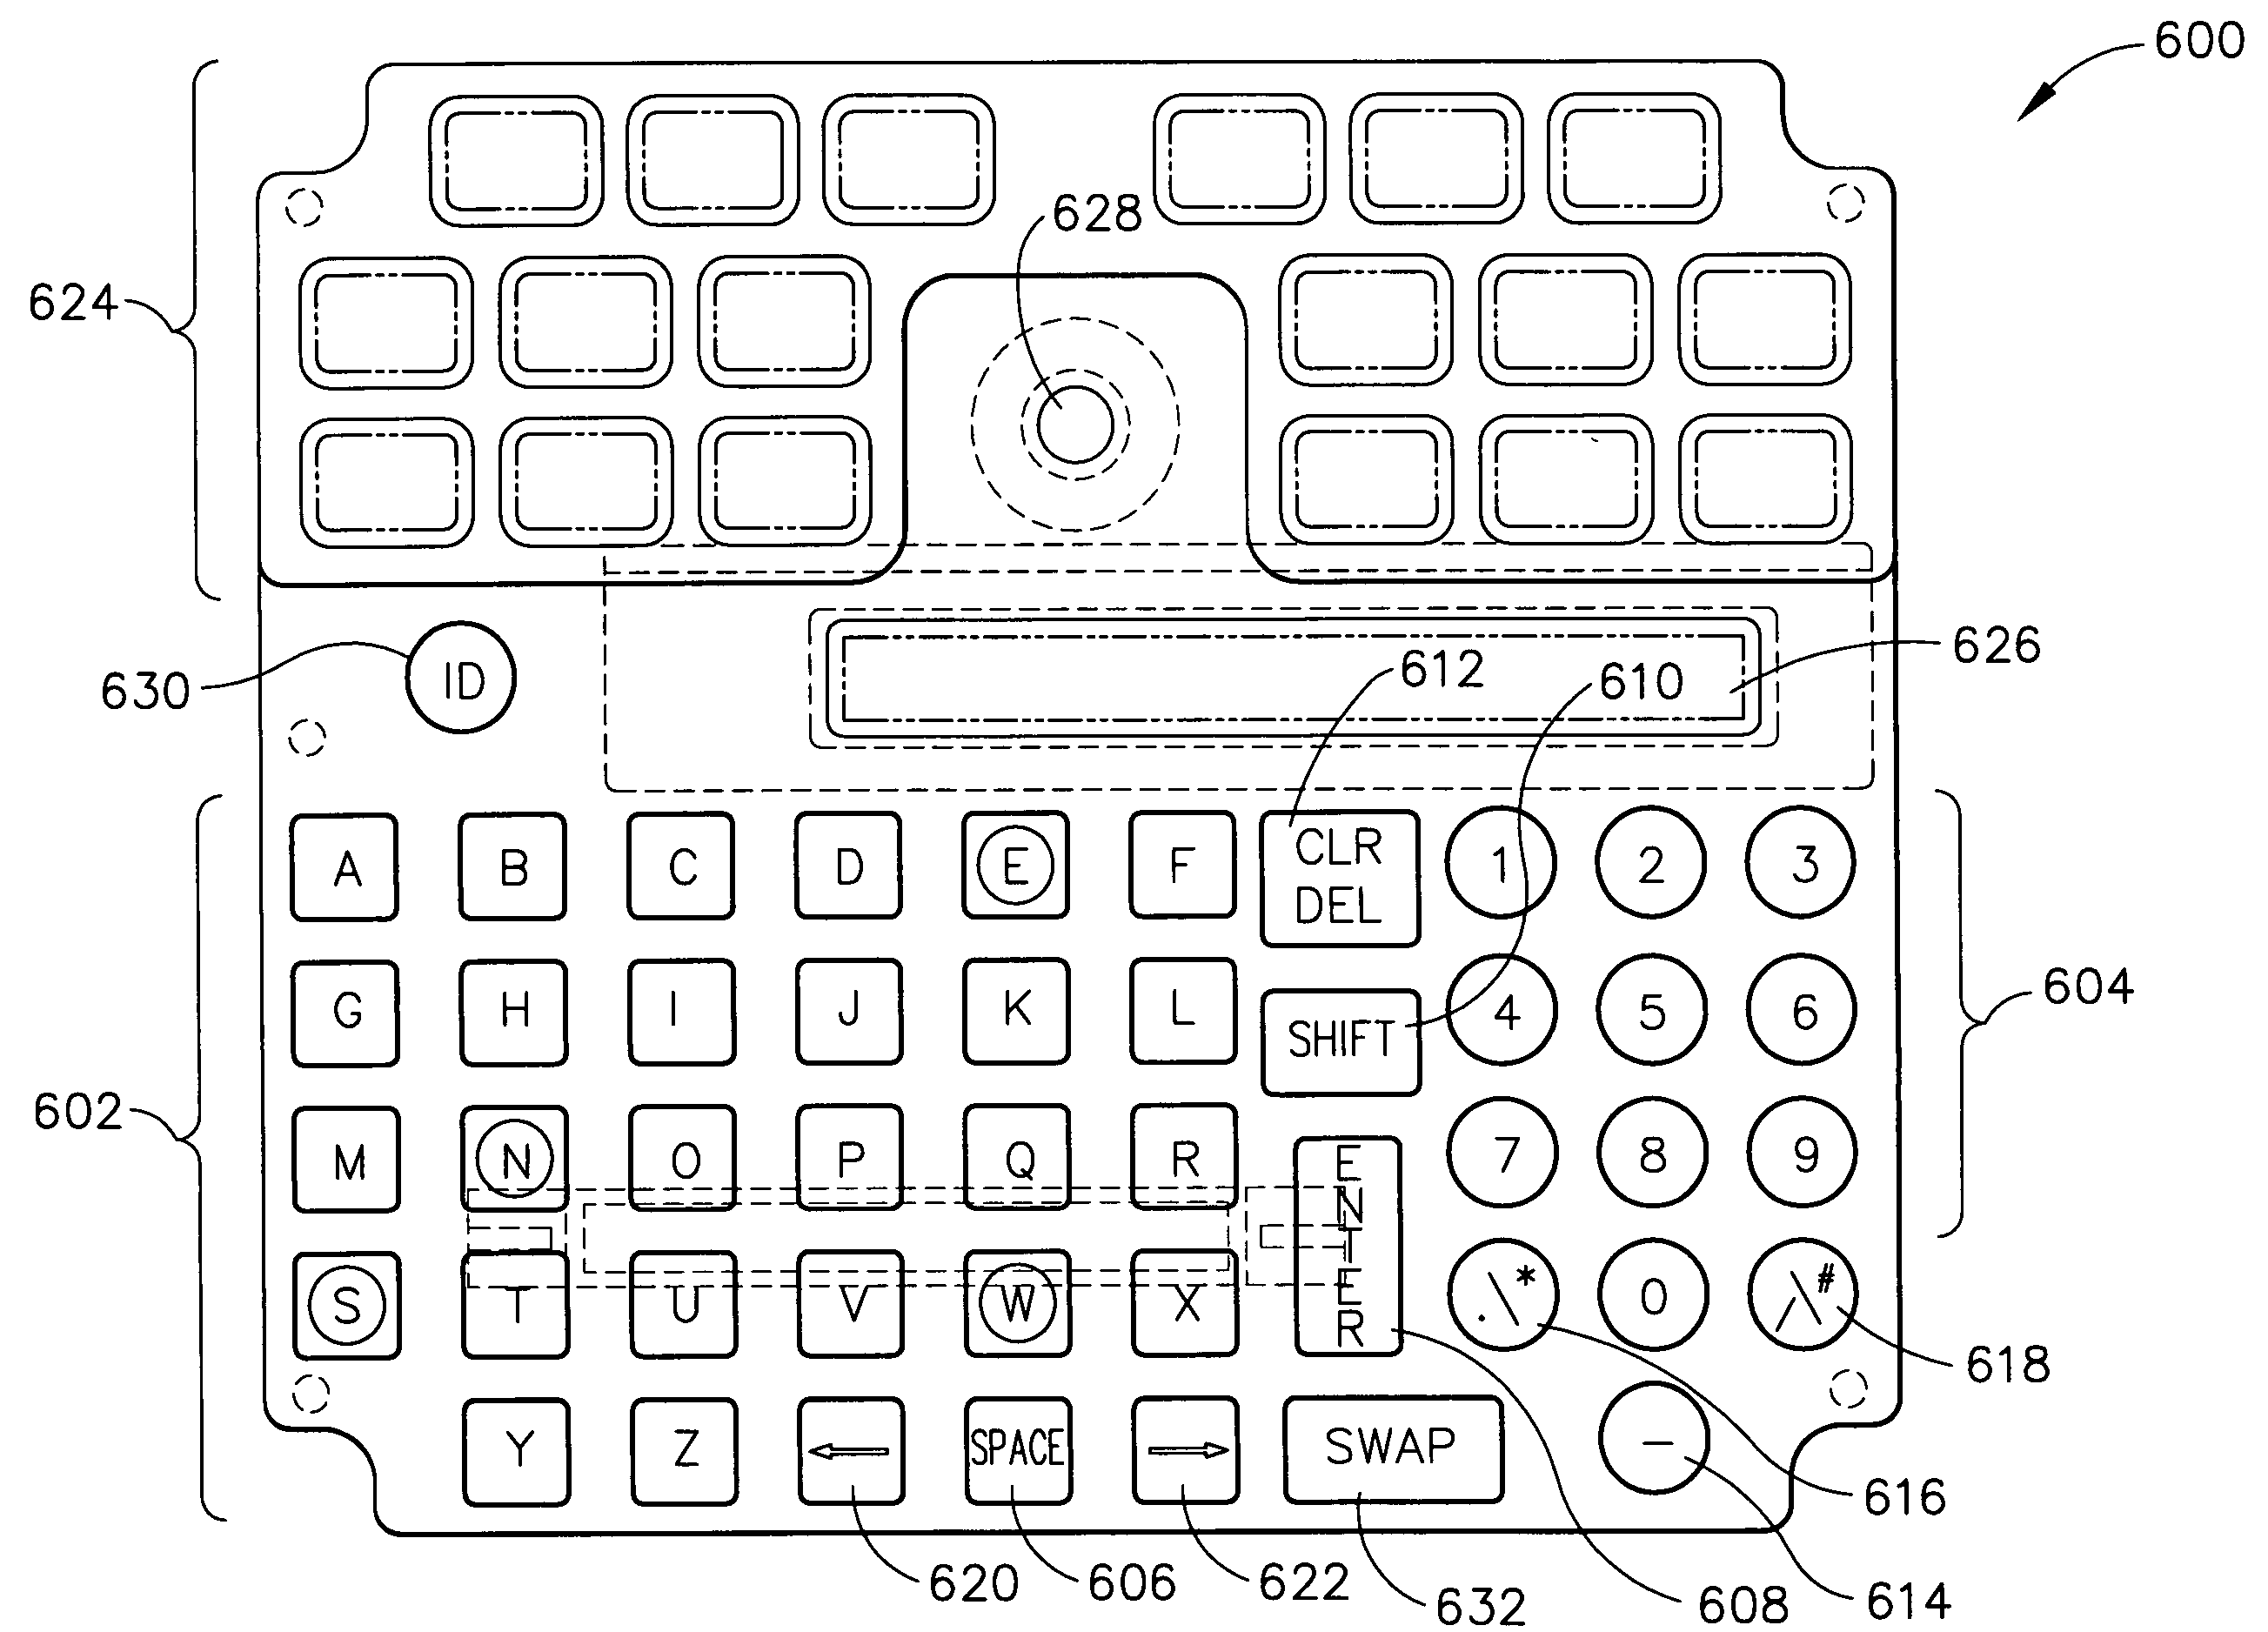 Multifunction keyboard for advanced cursor driven avionic flight decks